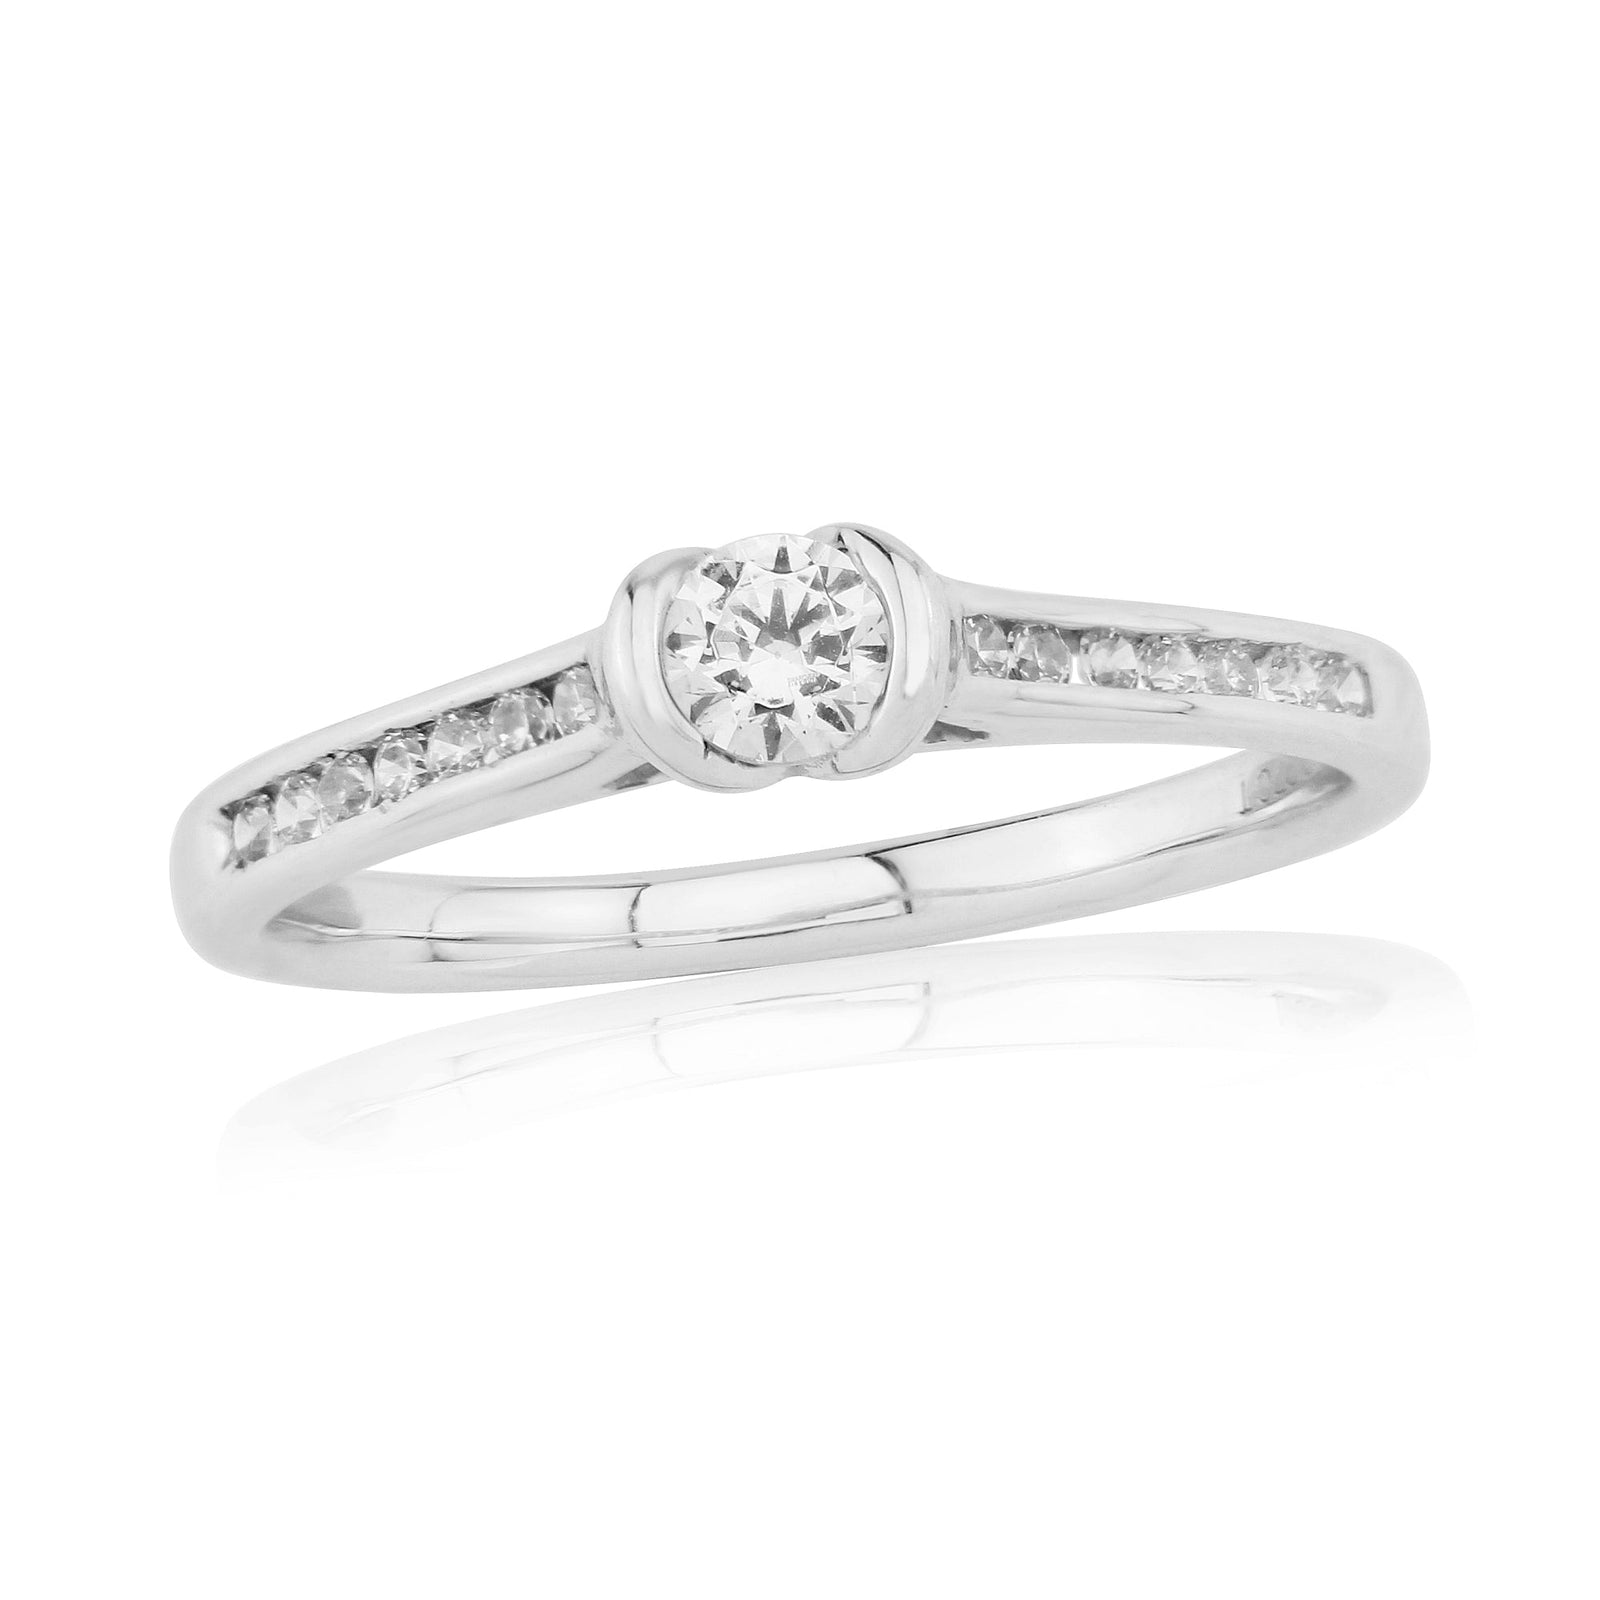 9ct white gold single stone diamond ring with diamond set shoulders 0.27ct